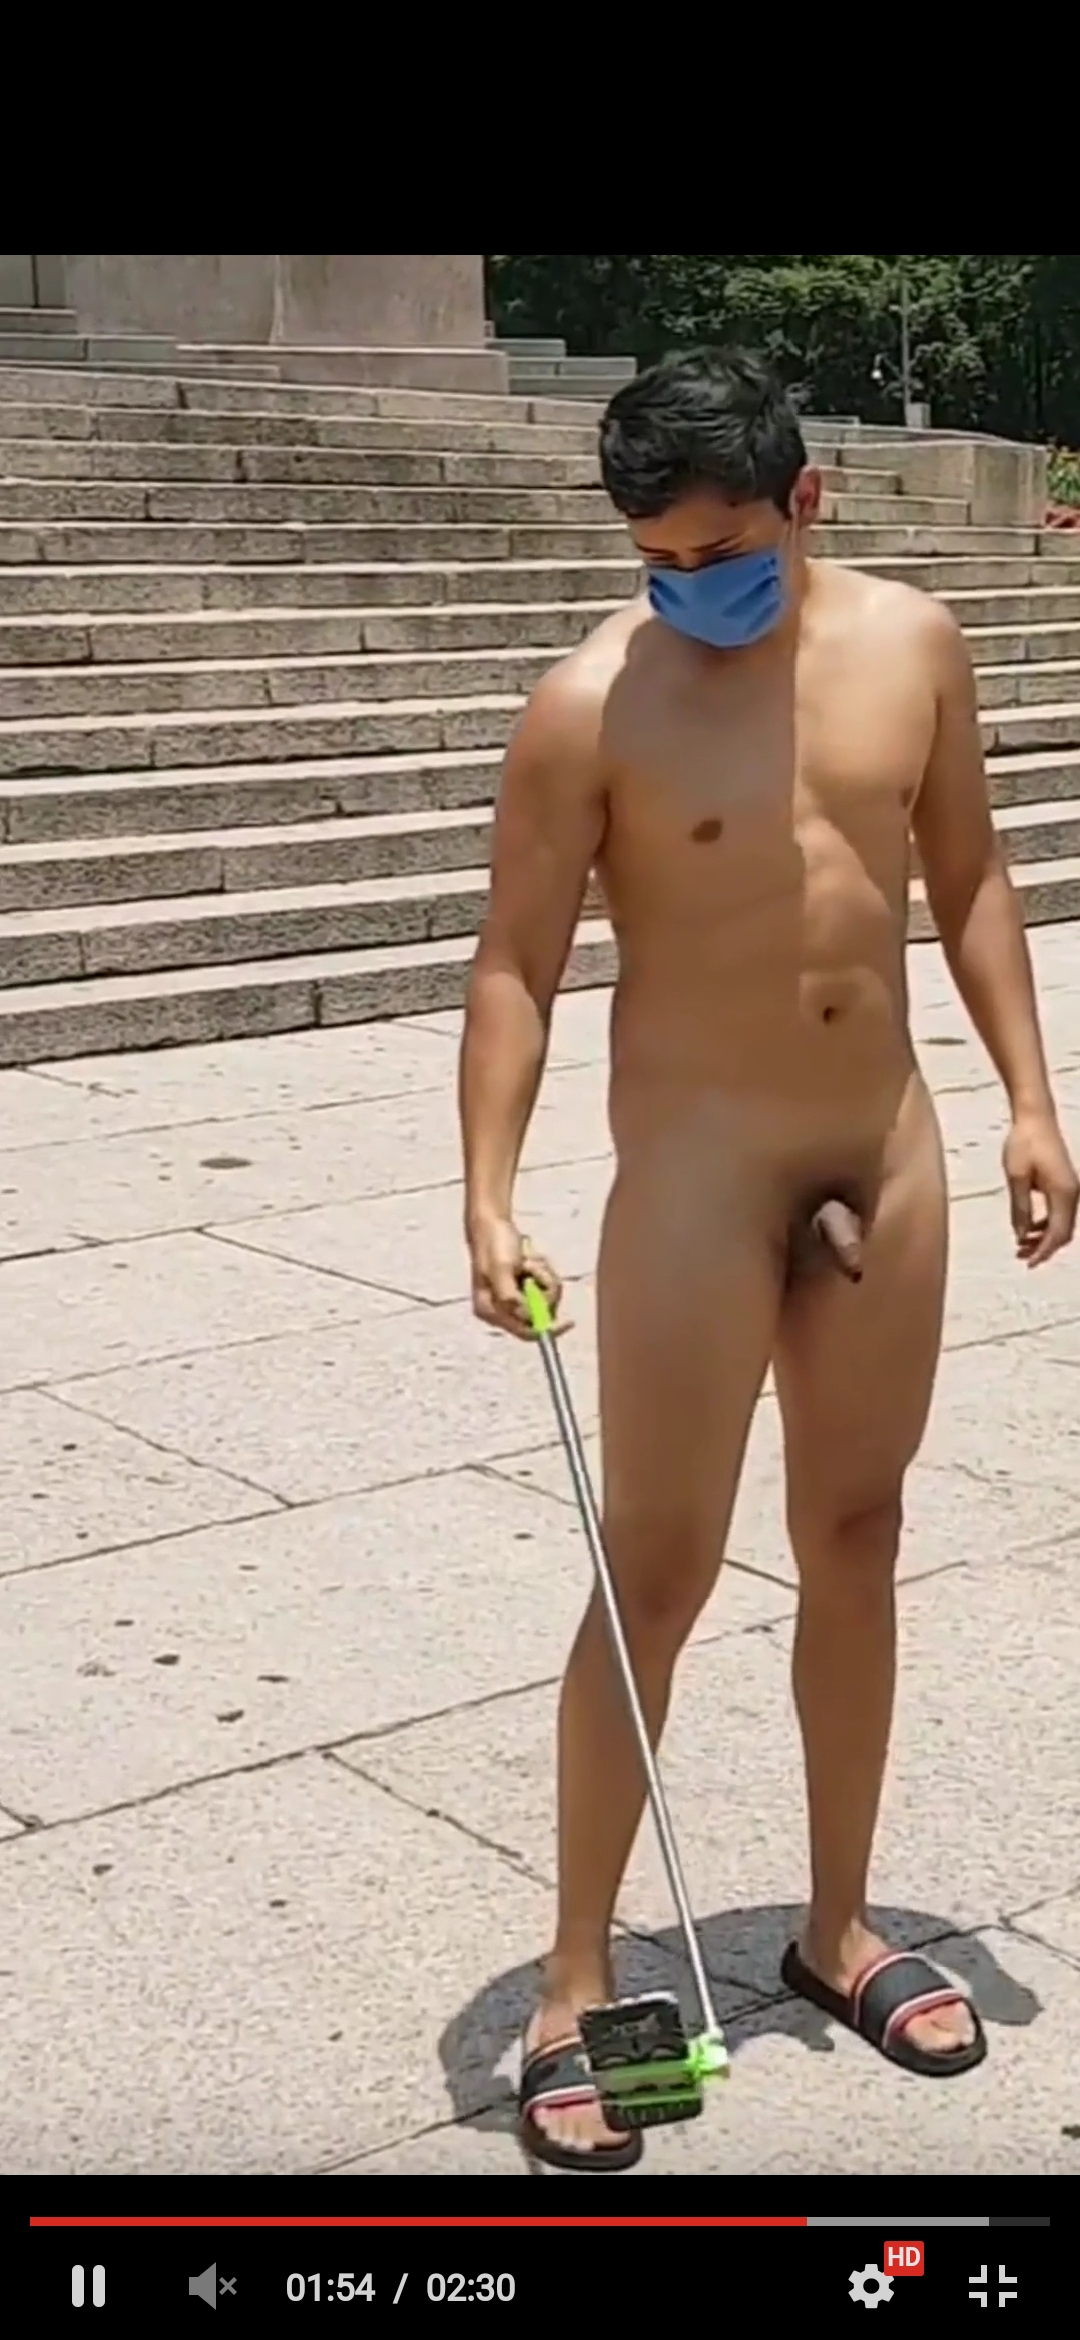 Nude men in public wnbr